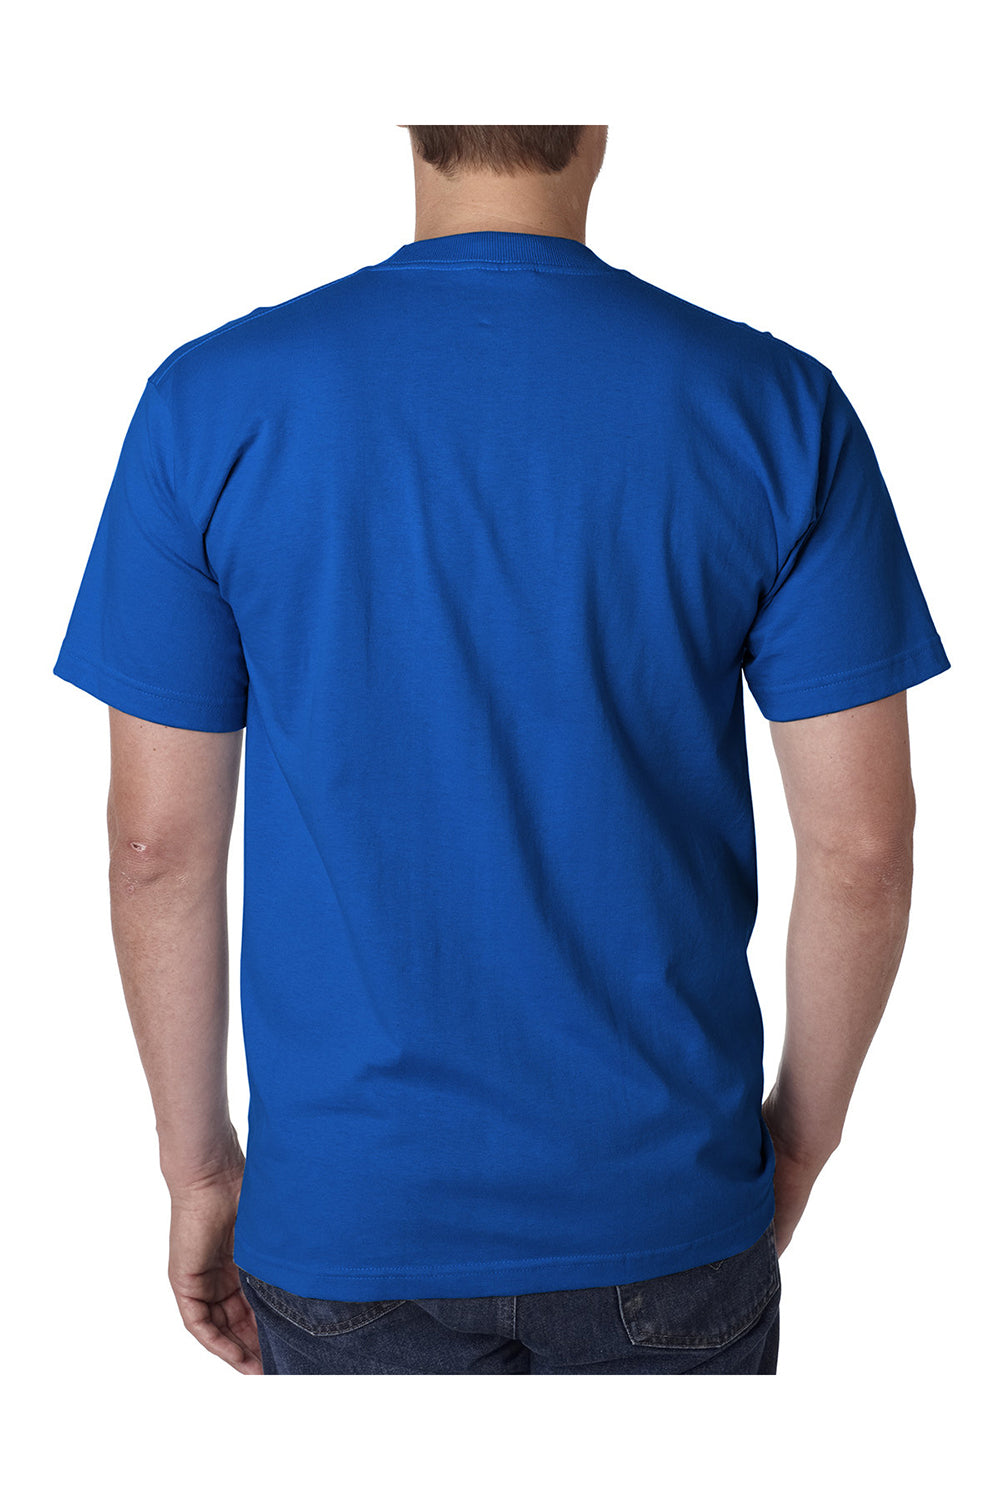 Bayside BA5100 Mens USA Made Short Sleeve Crewneck T-Shirt Royal Blue Model Back